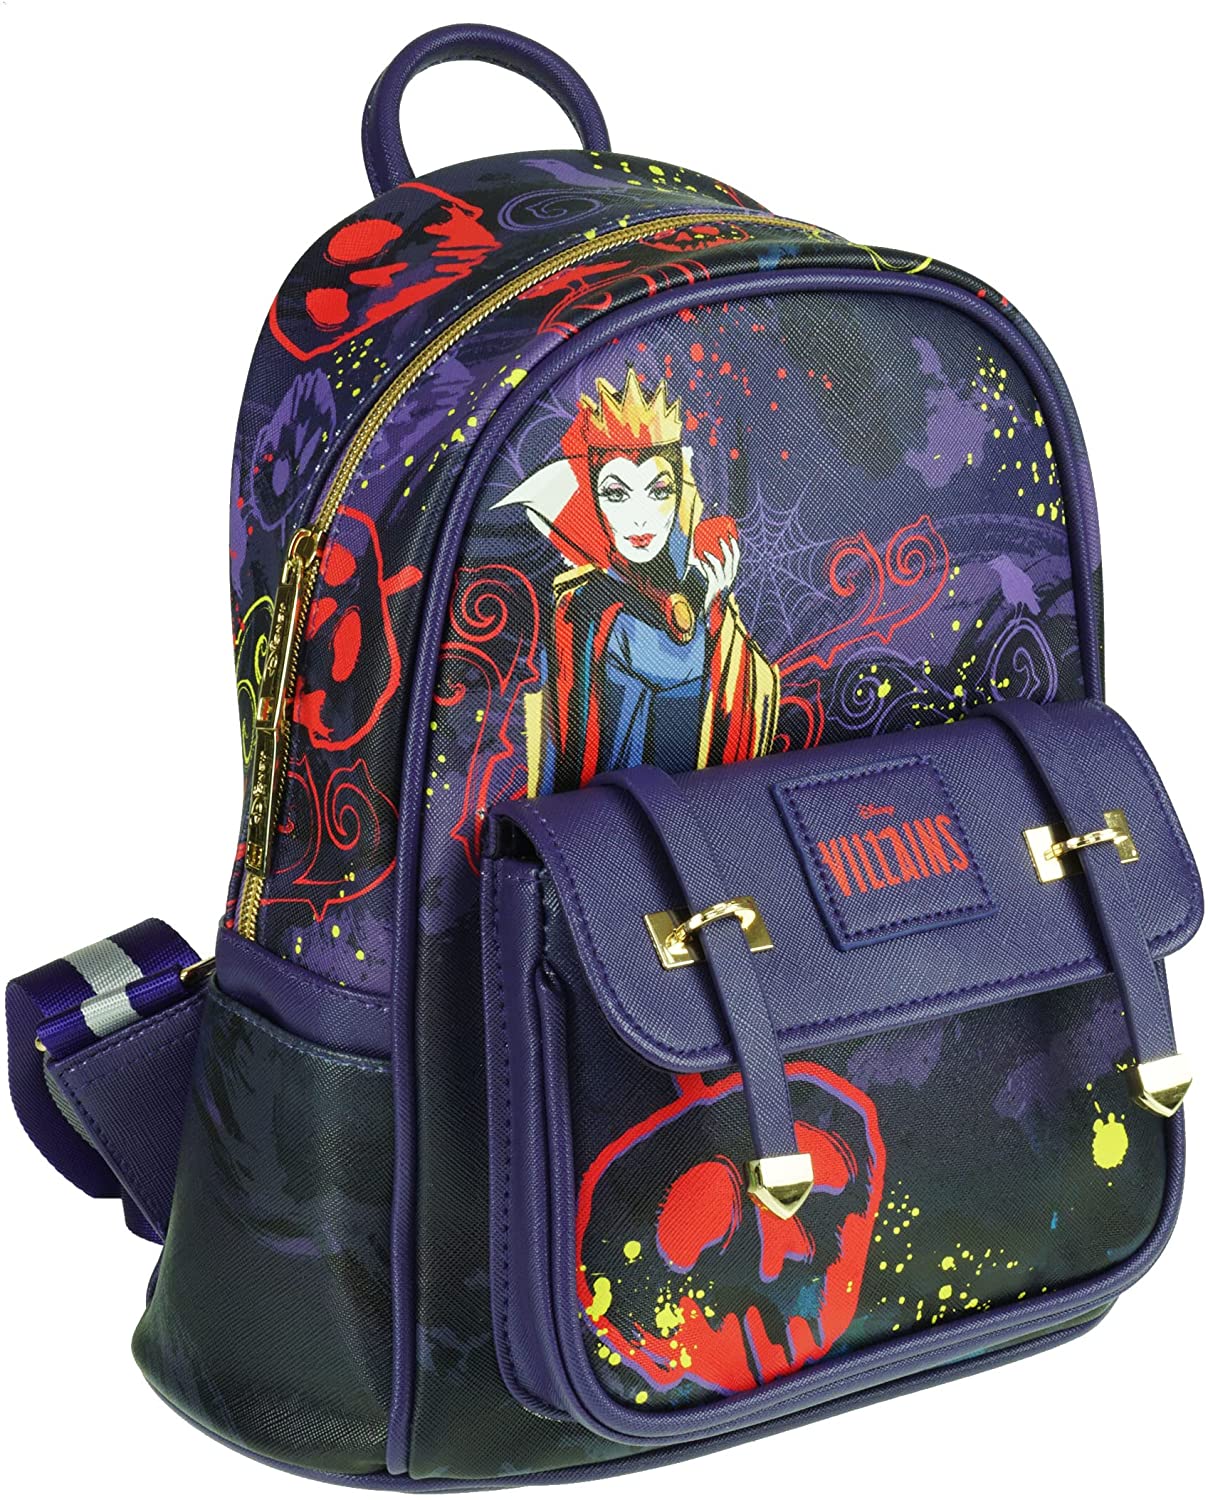 Villains - Evil Queen 11" Vegan Leather Mini Backpack - A21828 - GTE Zone